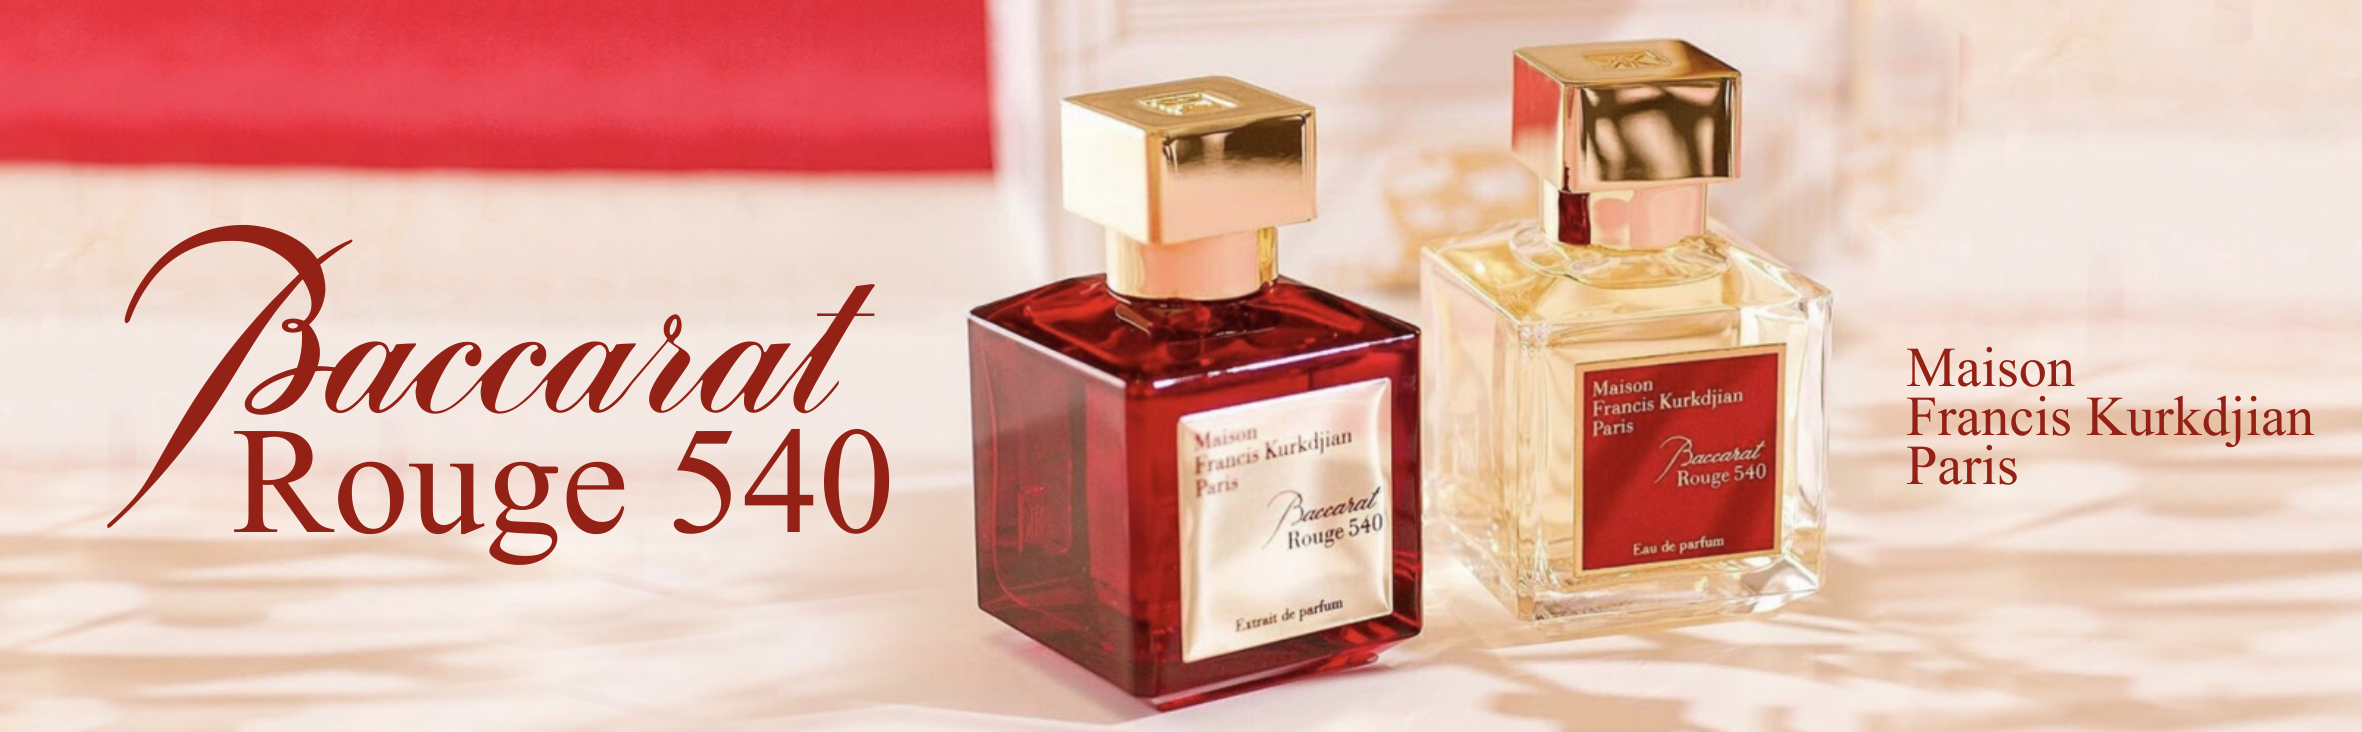 Carolina Herrera Good Girl Gold Fantasy Eau De Perfume Spray 80ml, Luxury  Perfume - Niche Perfume Shop